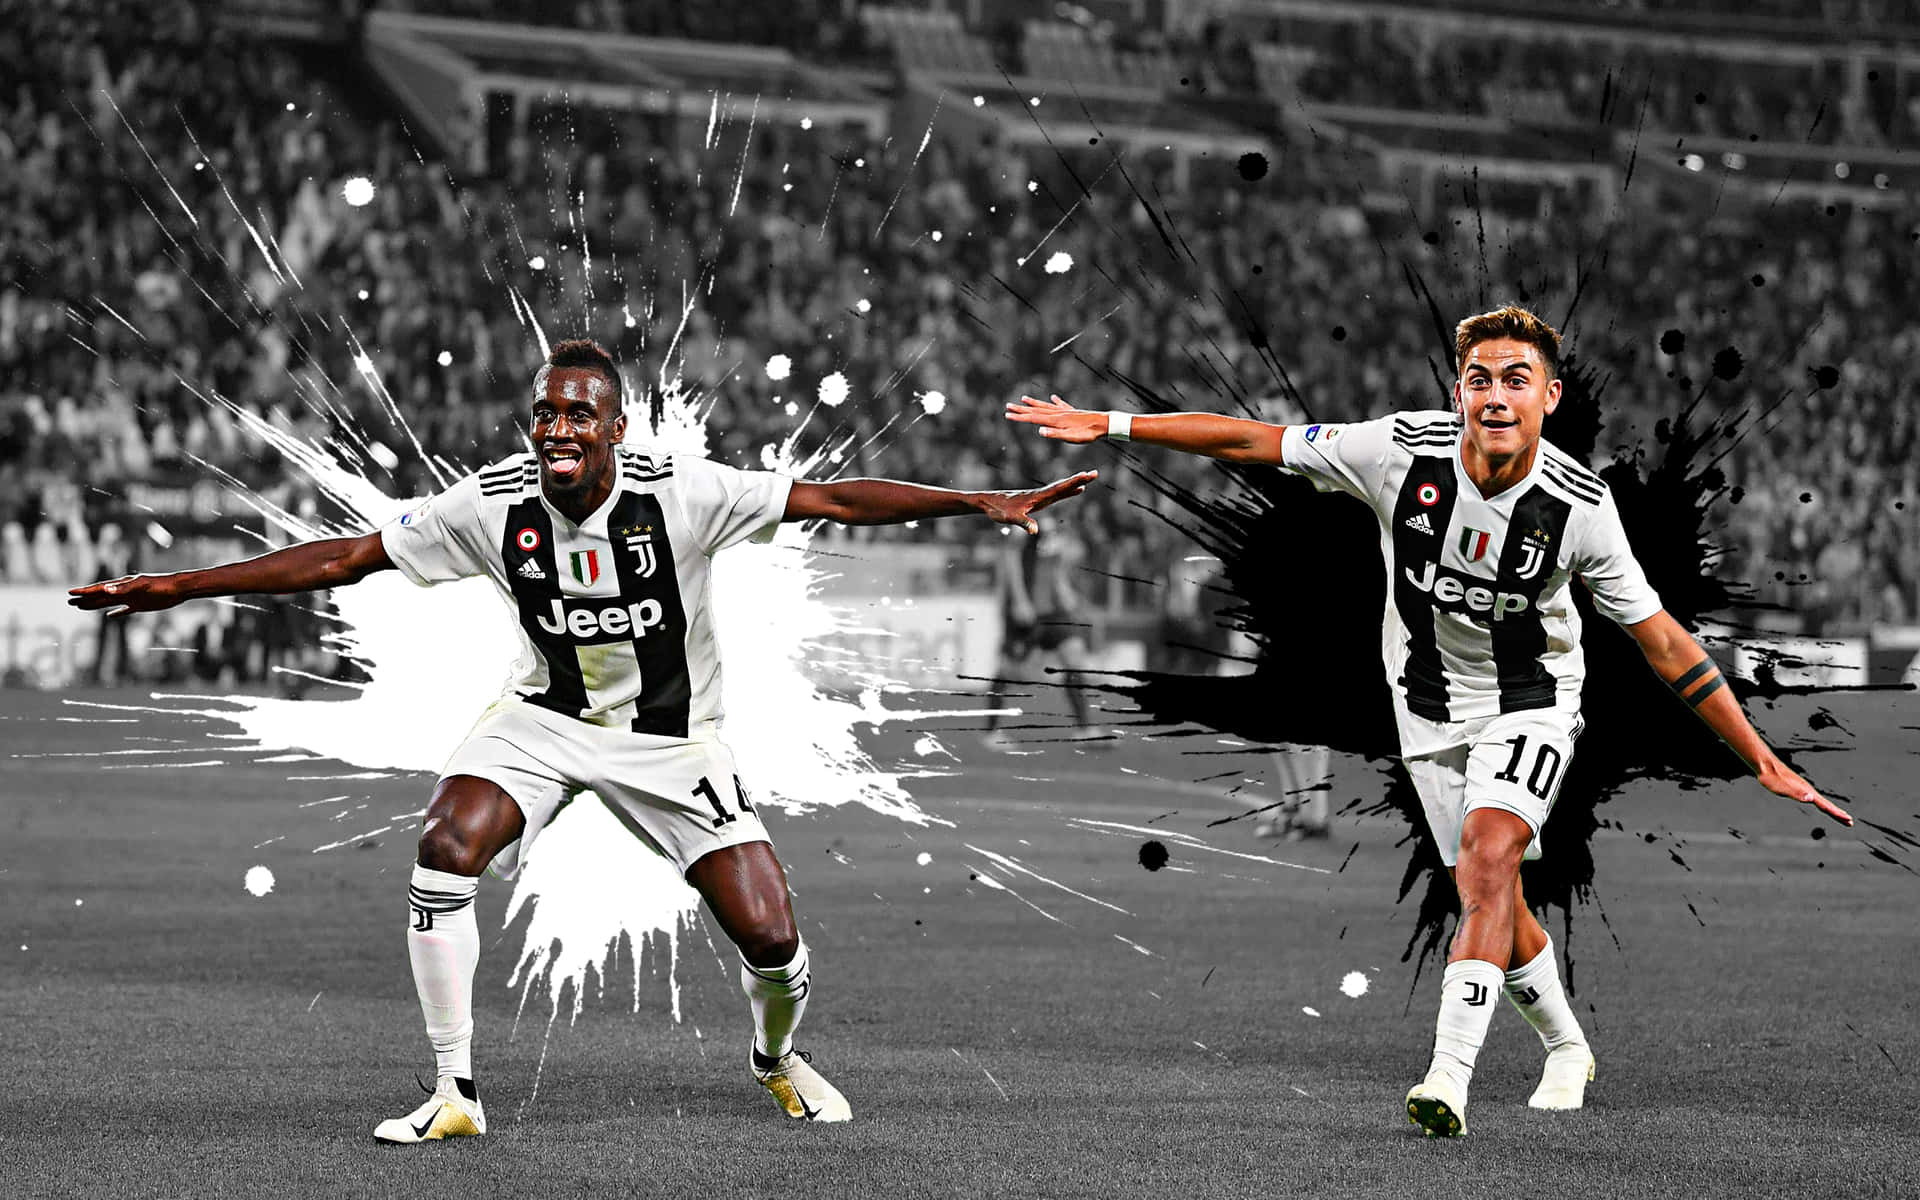 Blaisematuidi Y Paulo Dybala De La Juventus. Fondo de pantalla